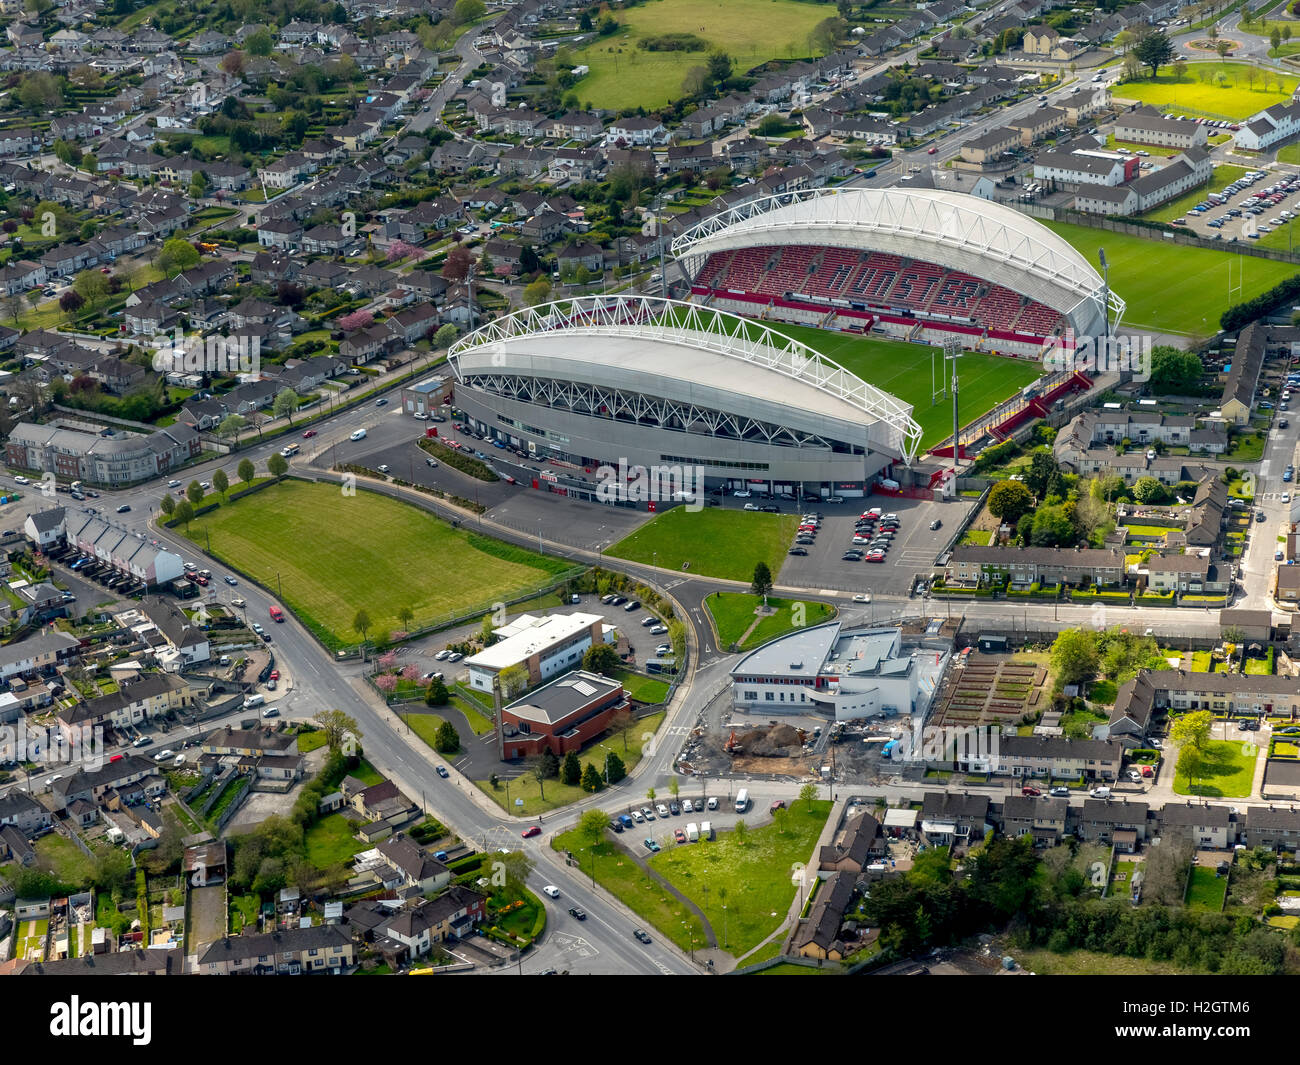 Thomond Park Stadium, Rugby Stadium, Limerick, County Clare, Ireland Stock Photo